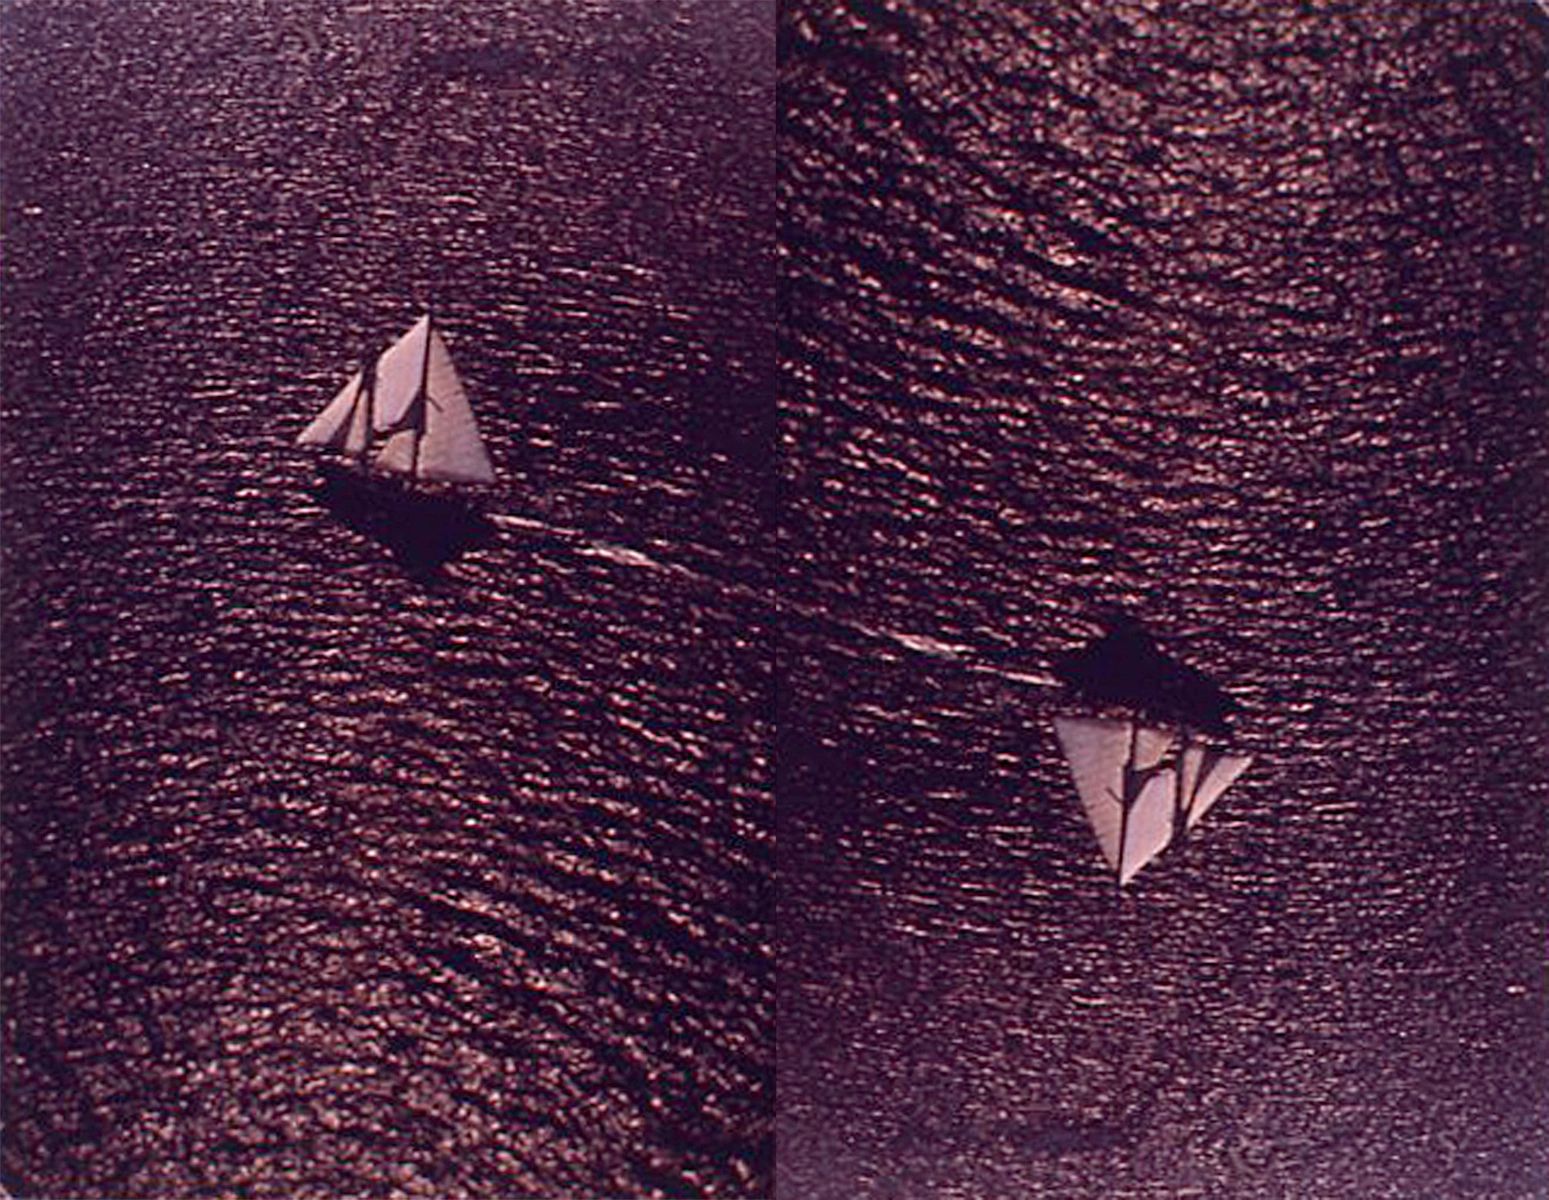 POSTCARD WORKS s  brown water sailboats 1971 collection JOHN BALDESSARI